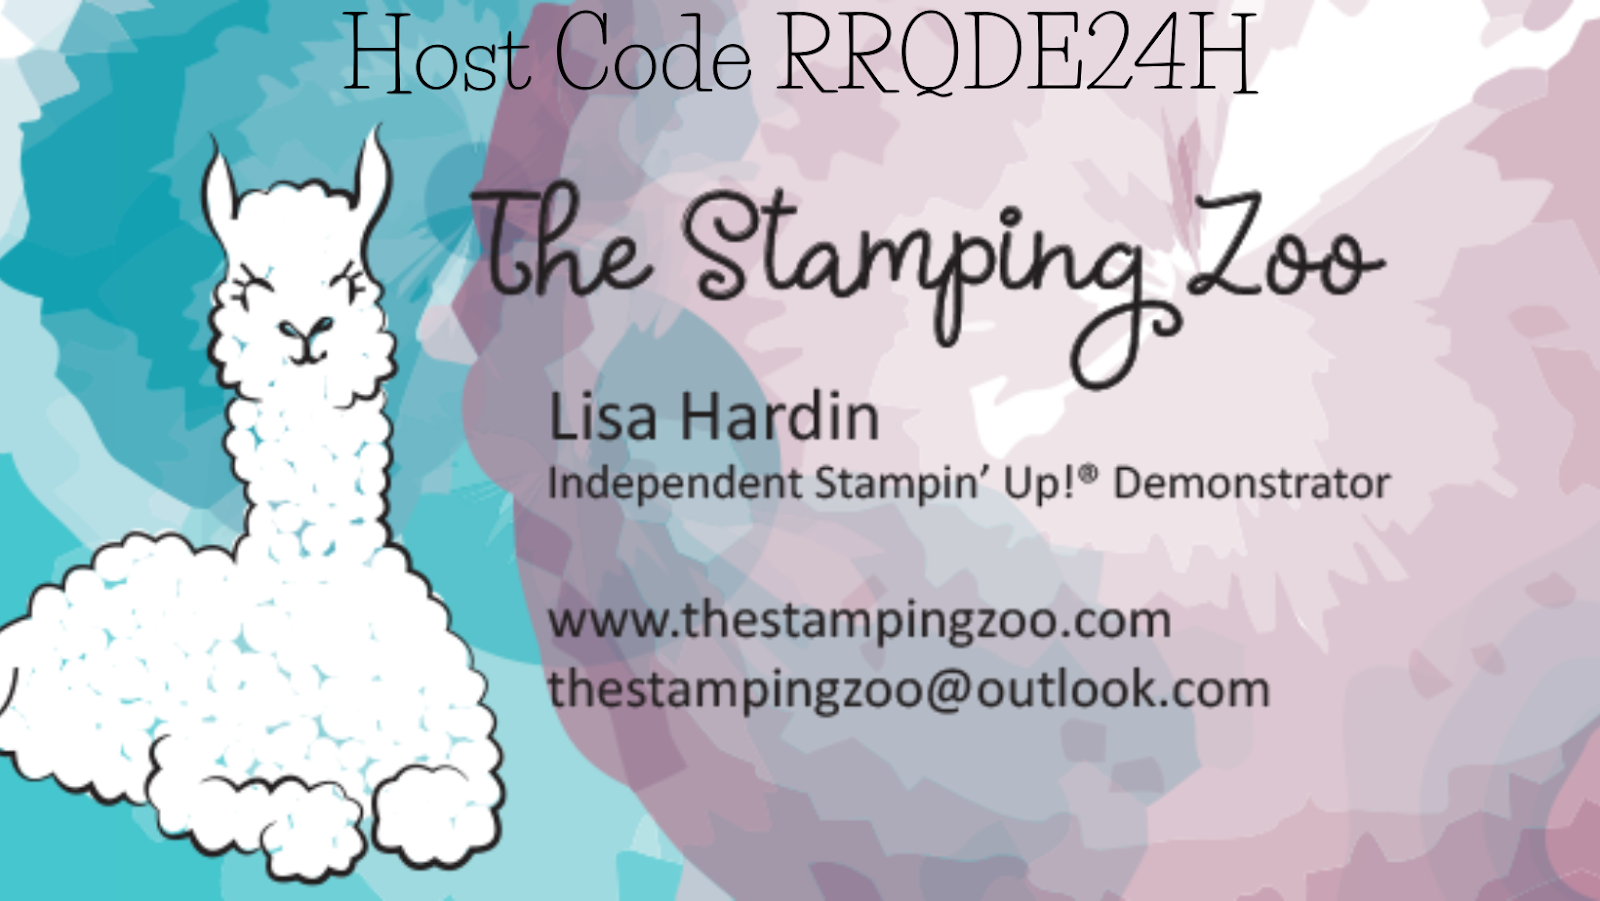 Stampin’ Up! Demonstrator Lisa Hardin